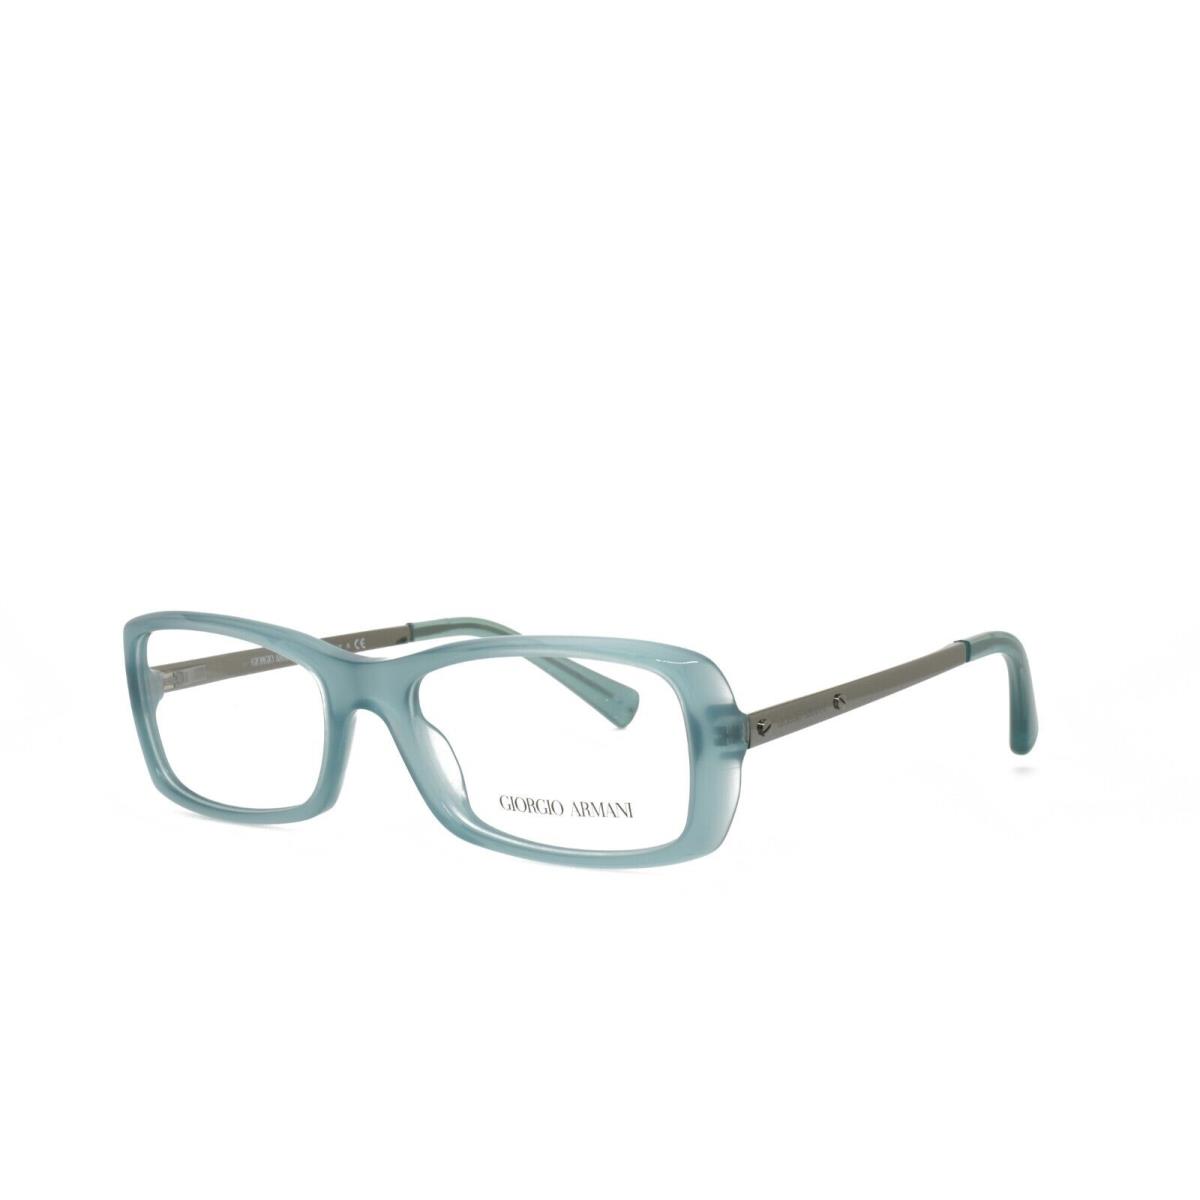 Giorgio Armani 7011 5034 51-17-135 Blue Eyeglasses Frames